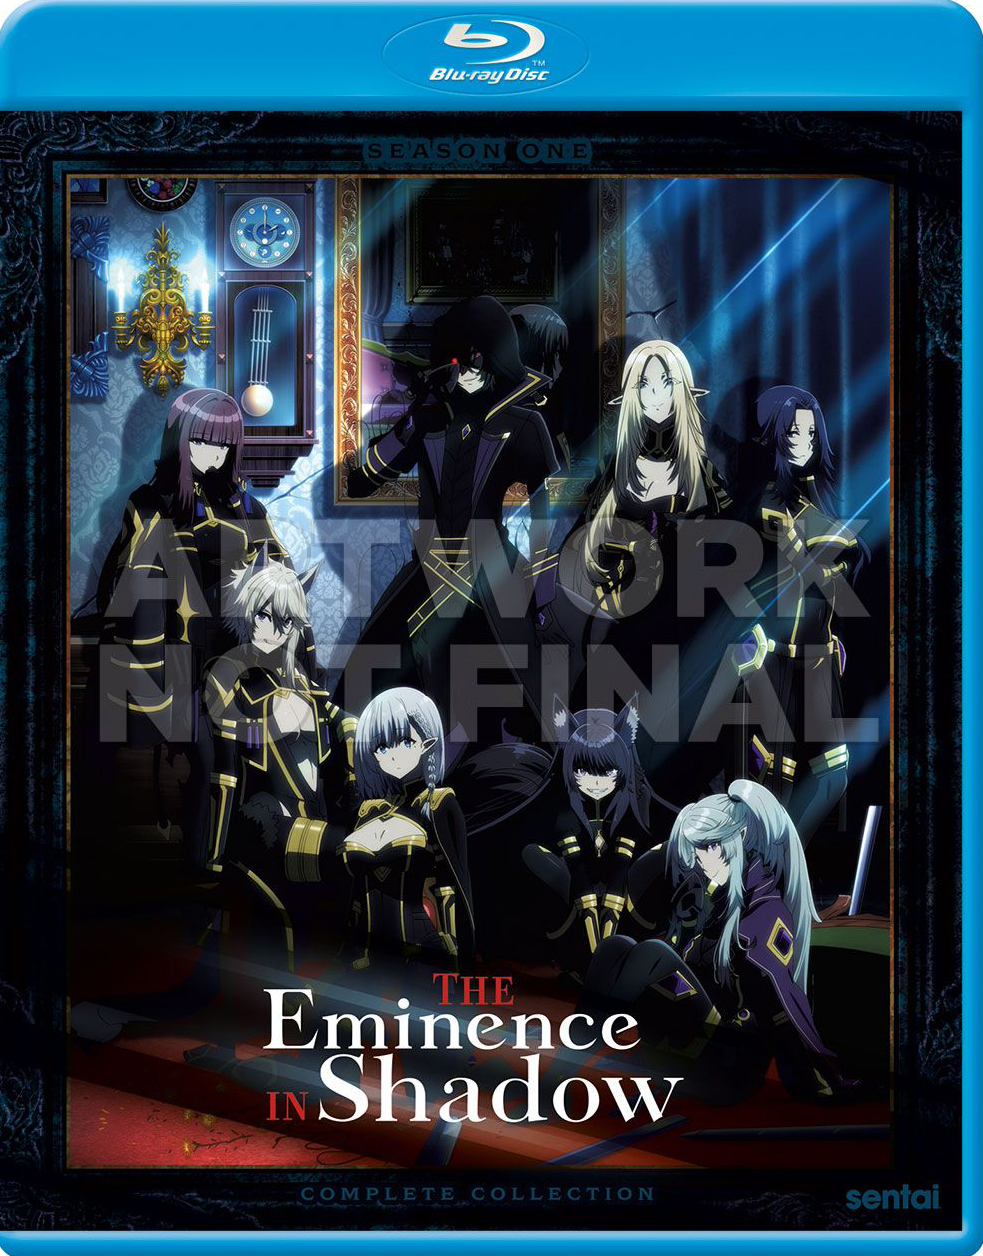 The Eminence in Shadow Season 1